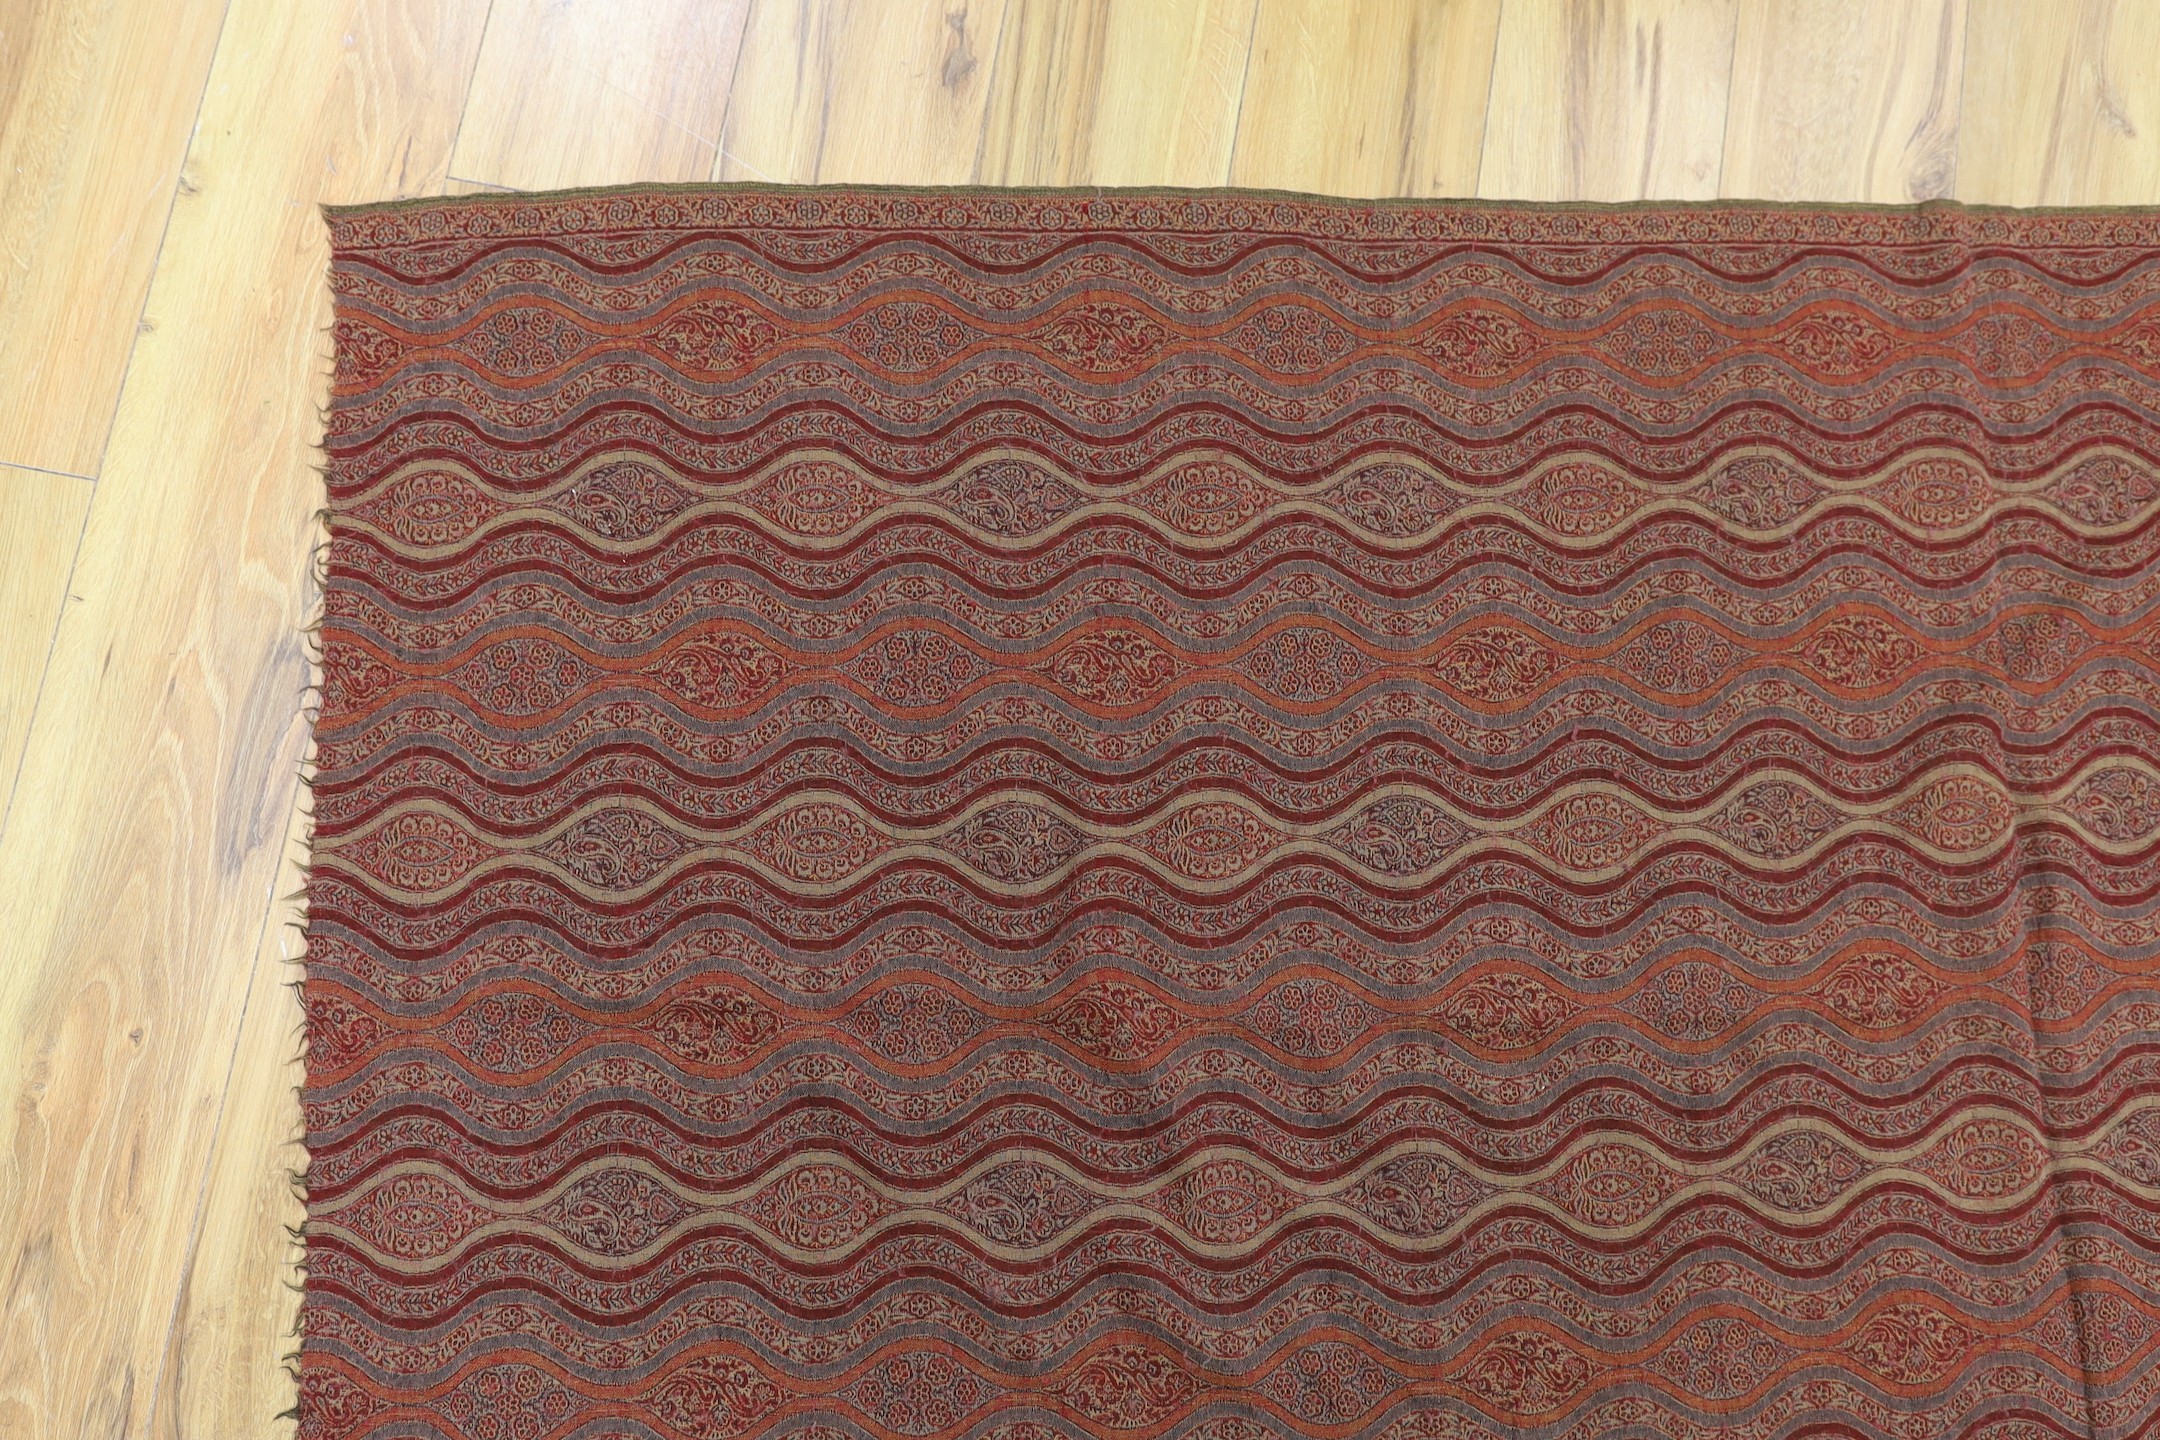 An Indian paisley shawl, 200 cms x 104 cms